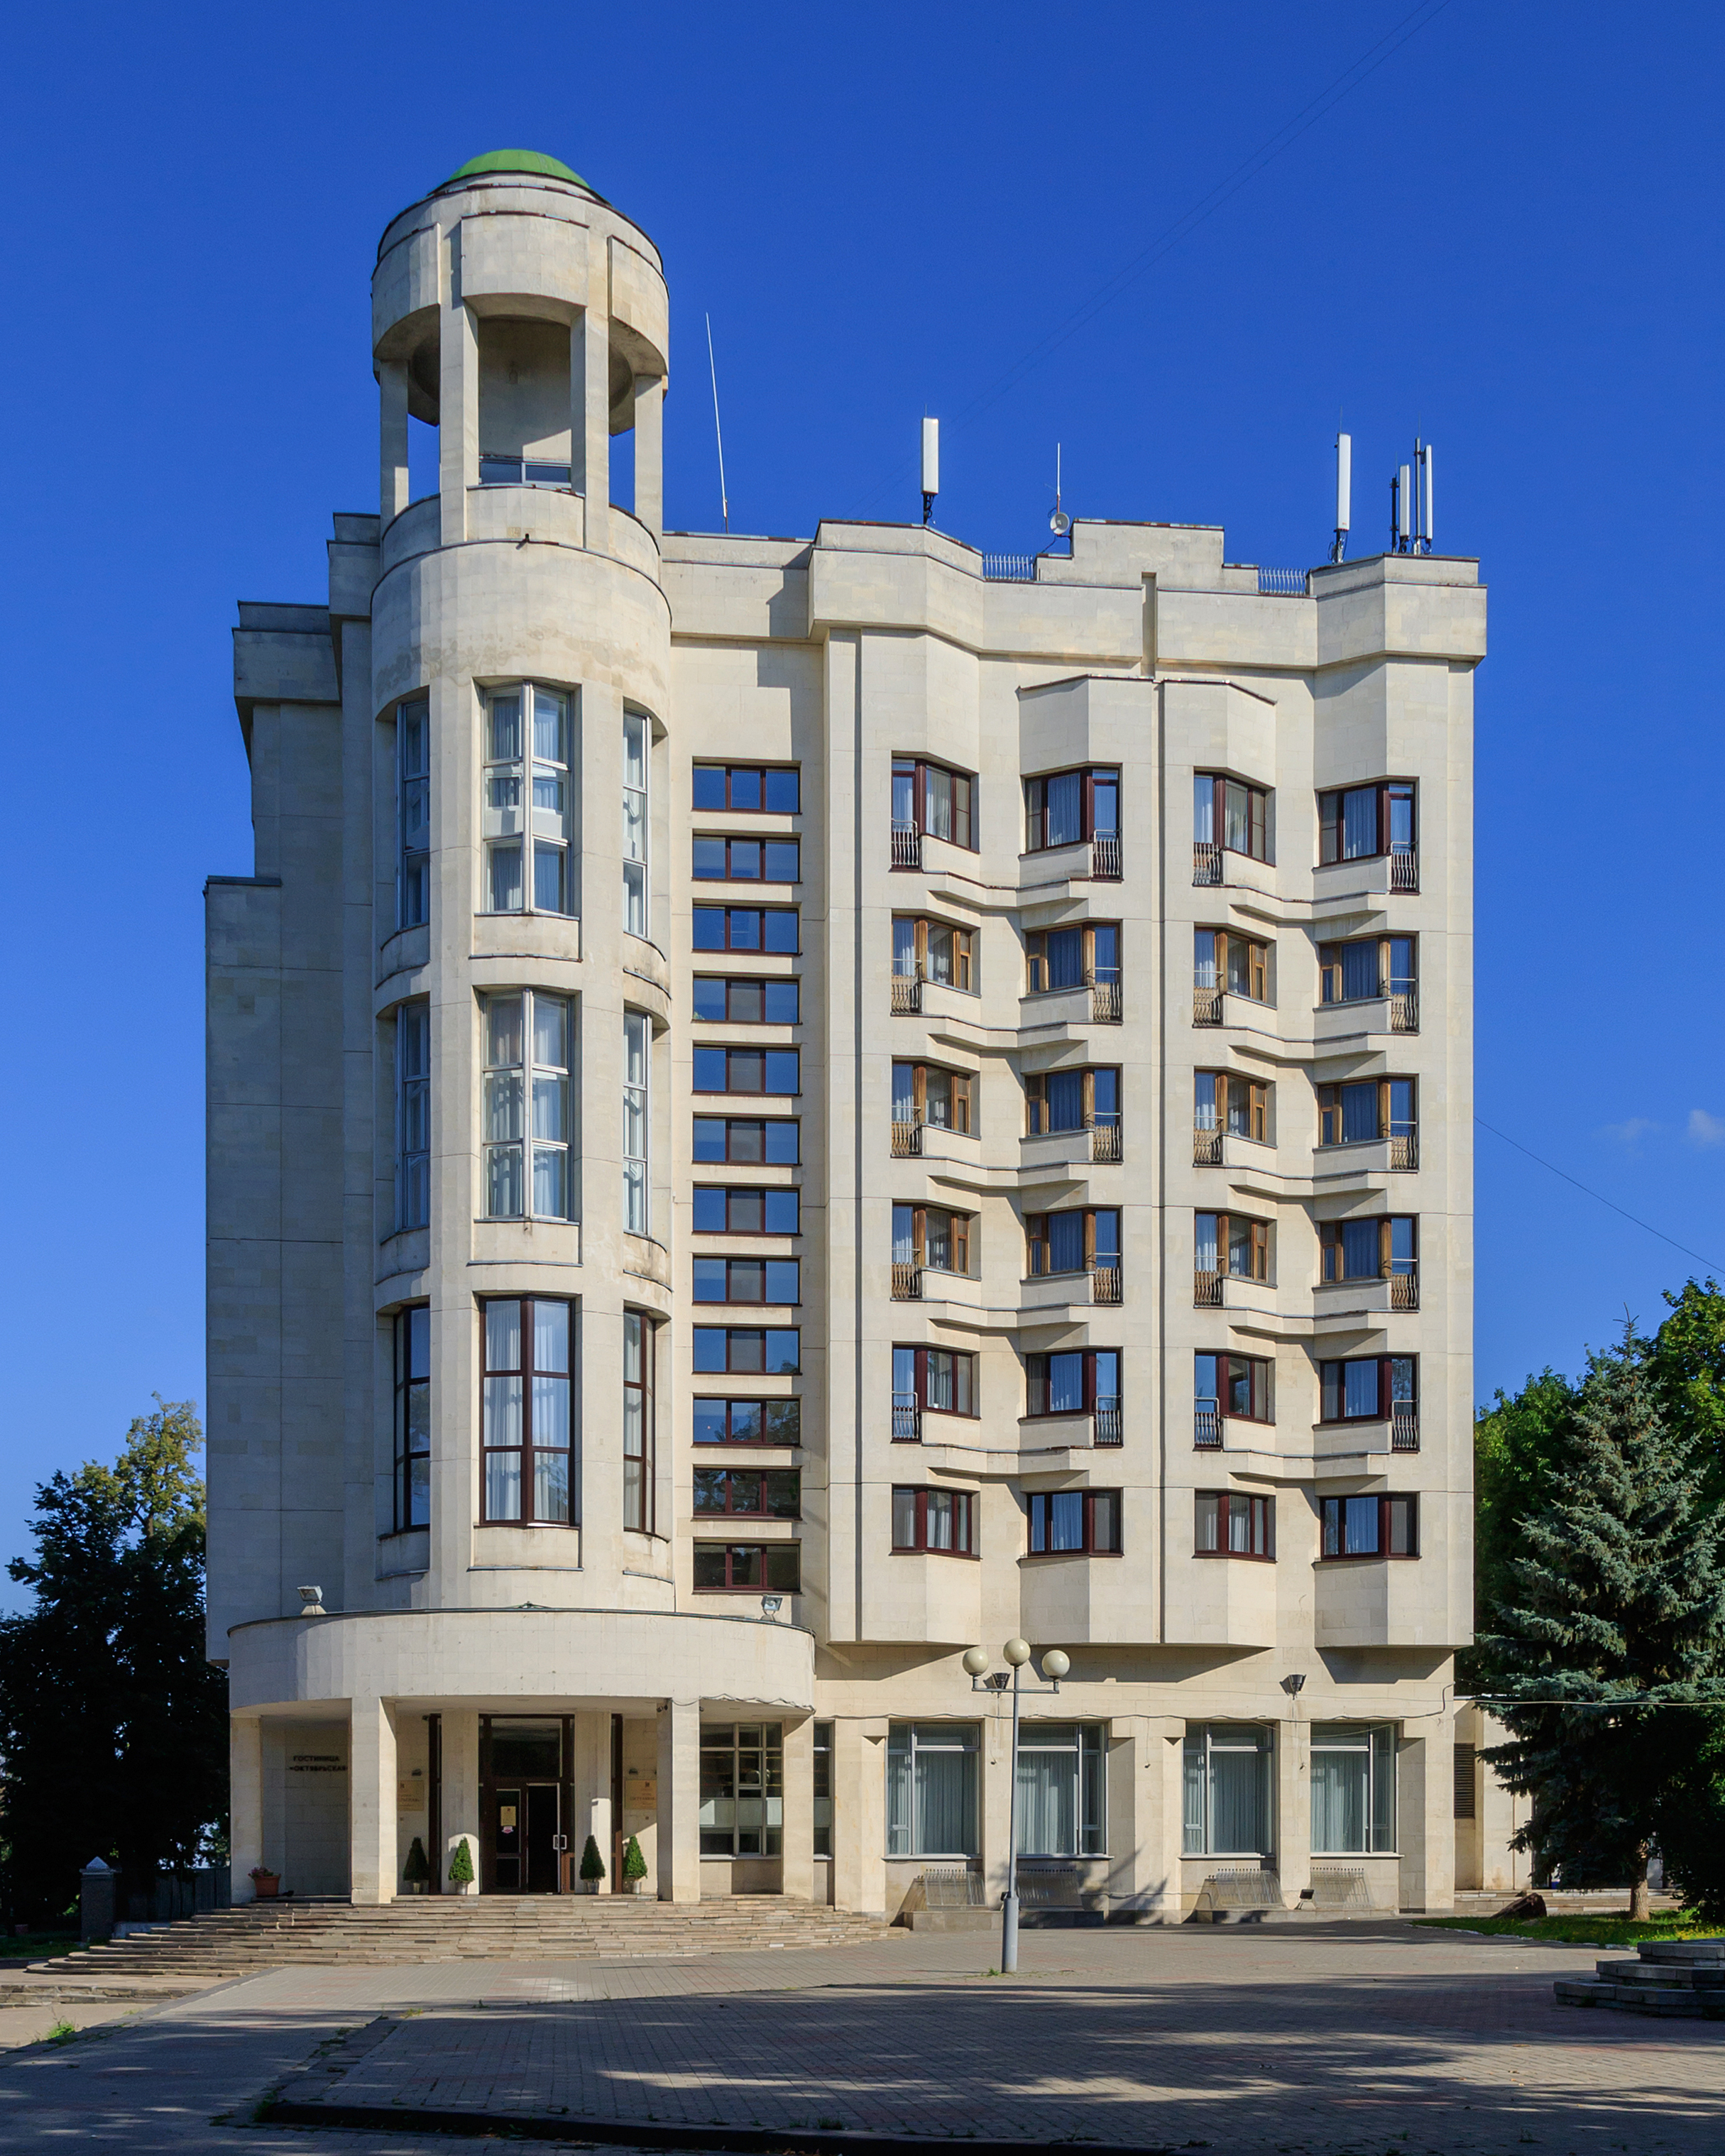 NN Oktyabrskaya Hotel 08-2016